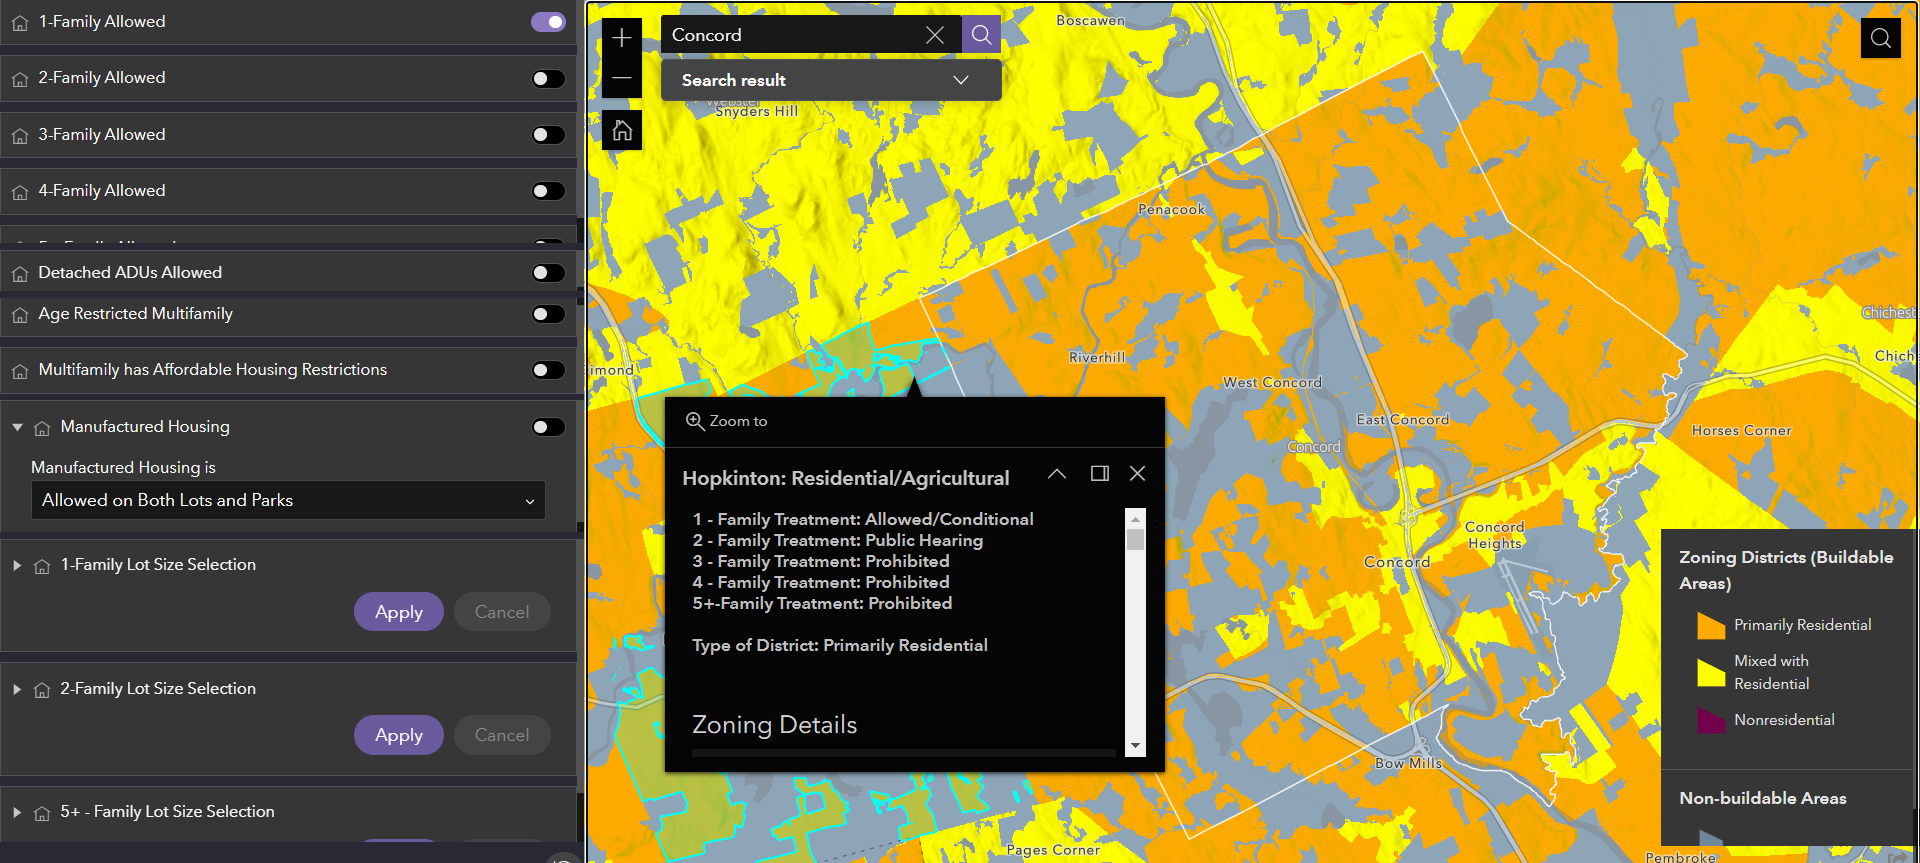 zoning atlas interactive map screen grab